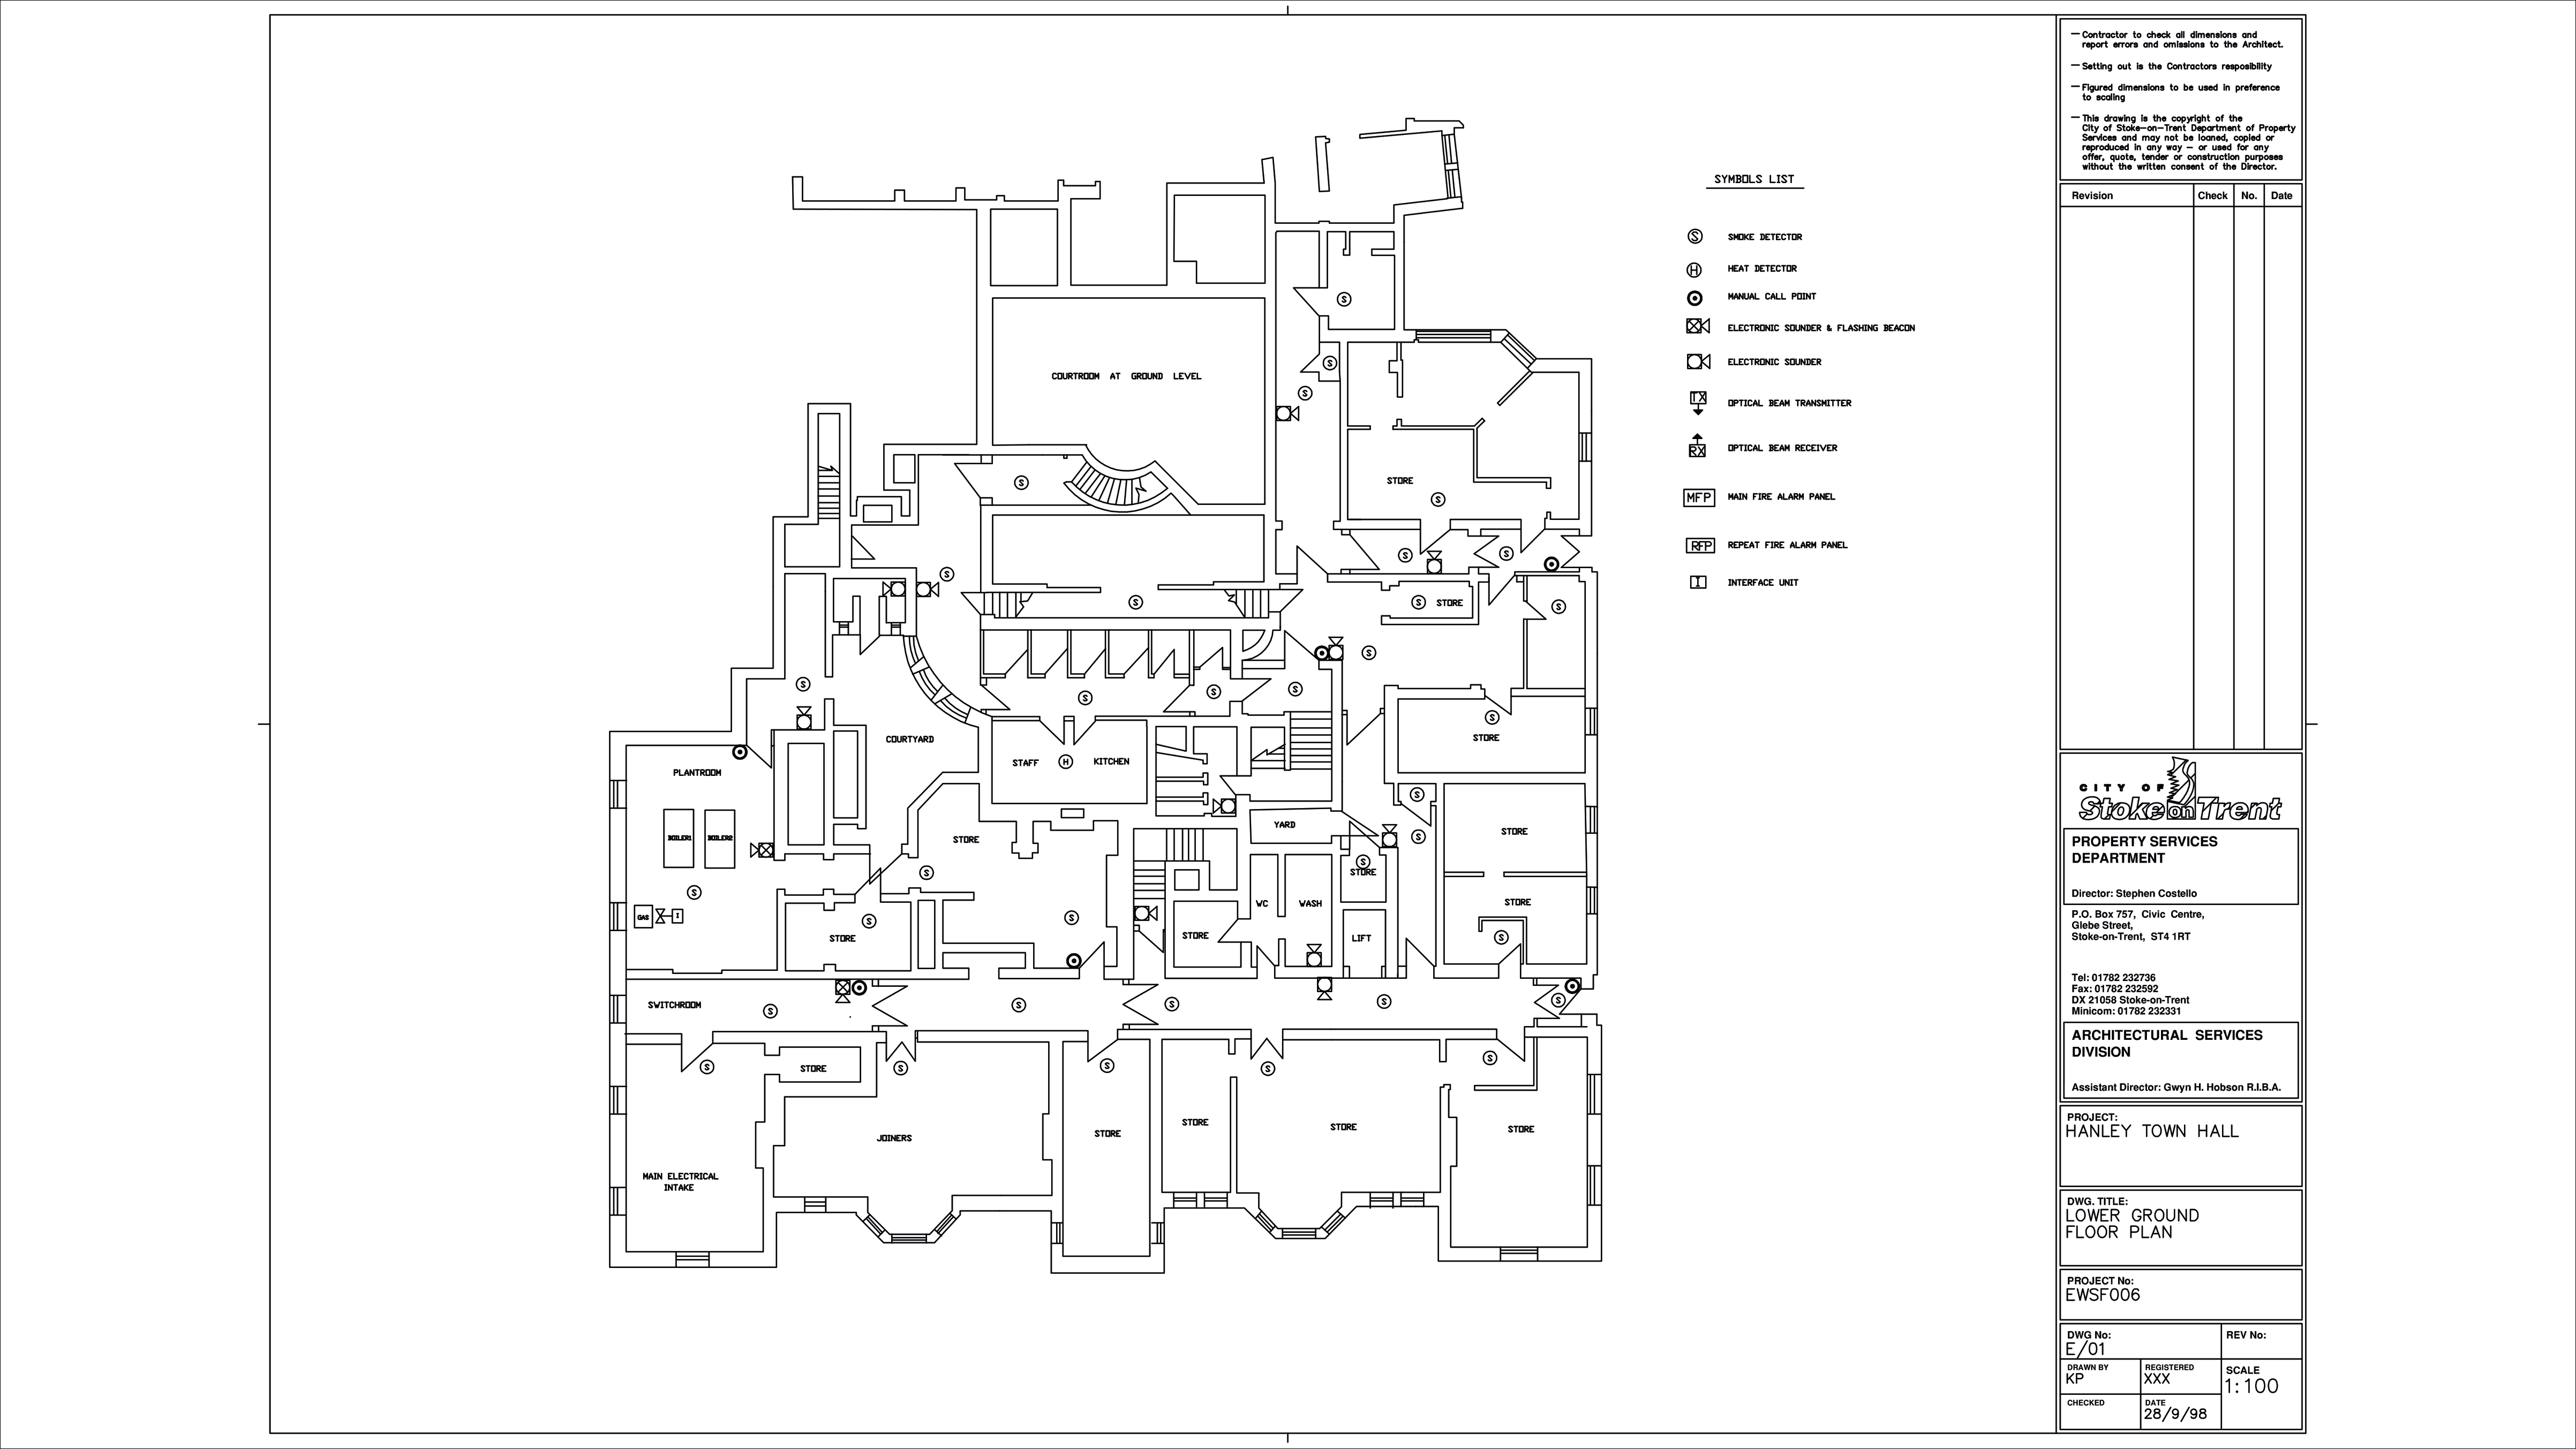 Hanley Town Hall - Ground Floor Plan